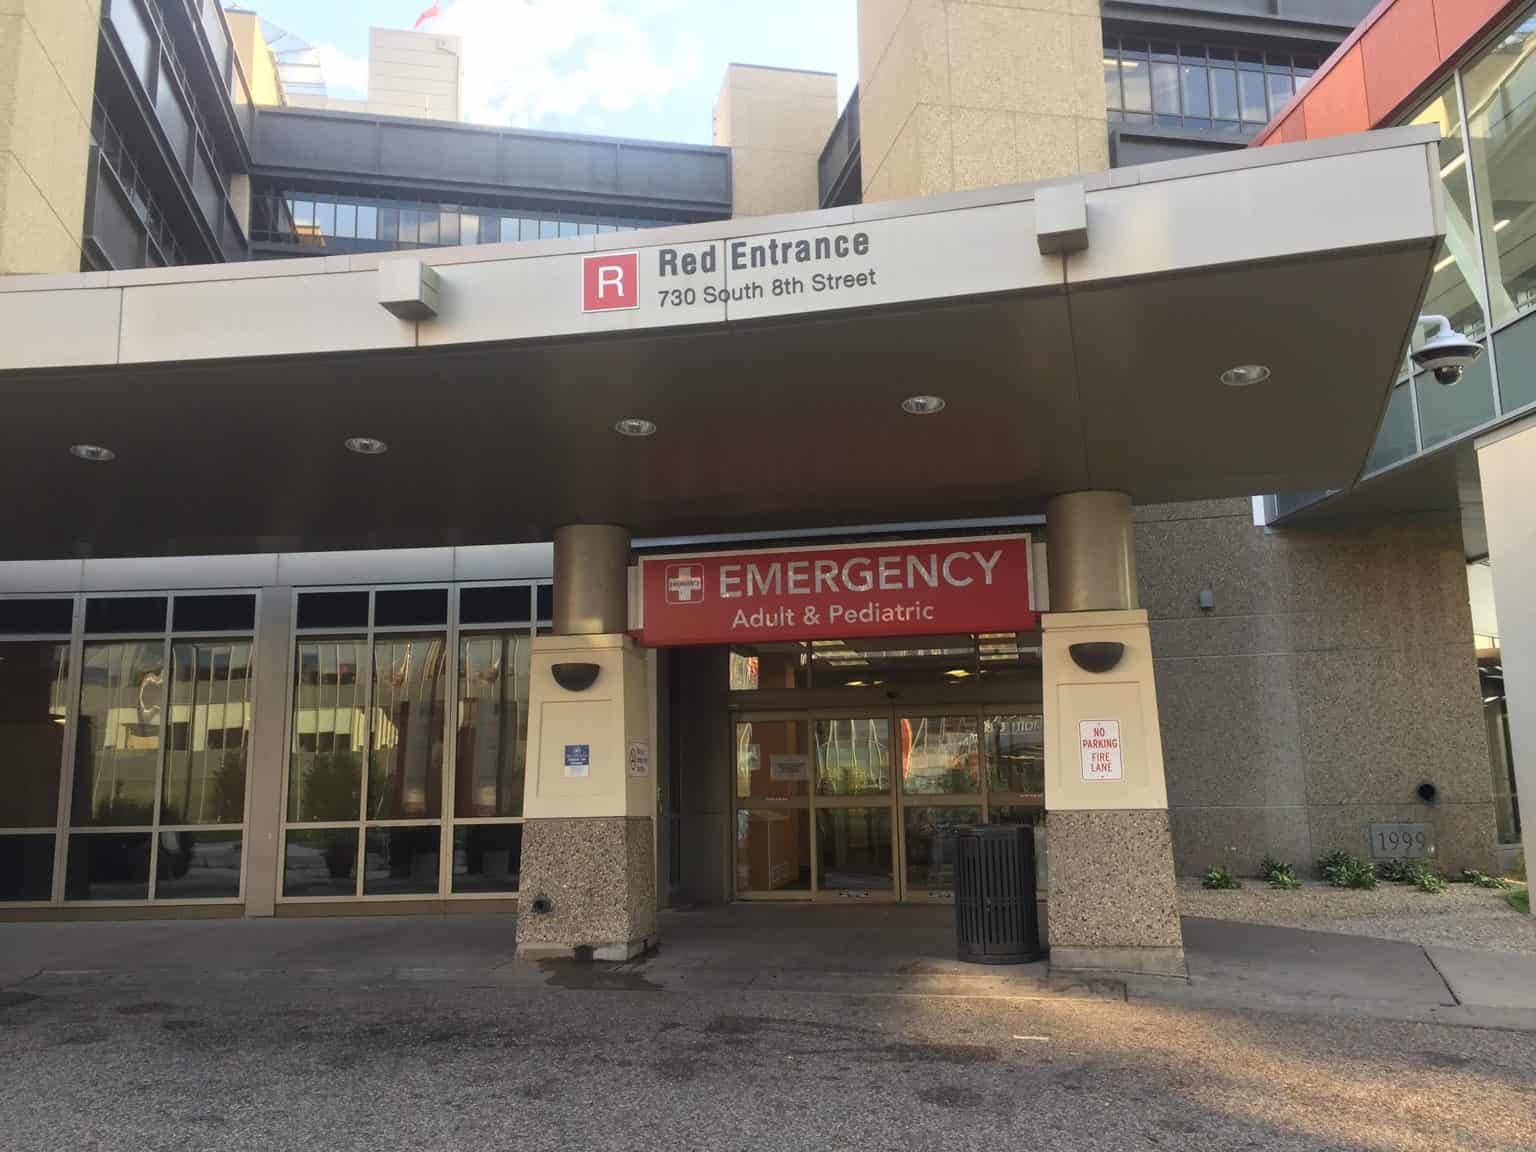 emergency entrance exterior